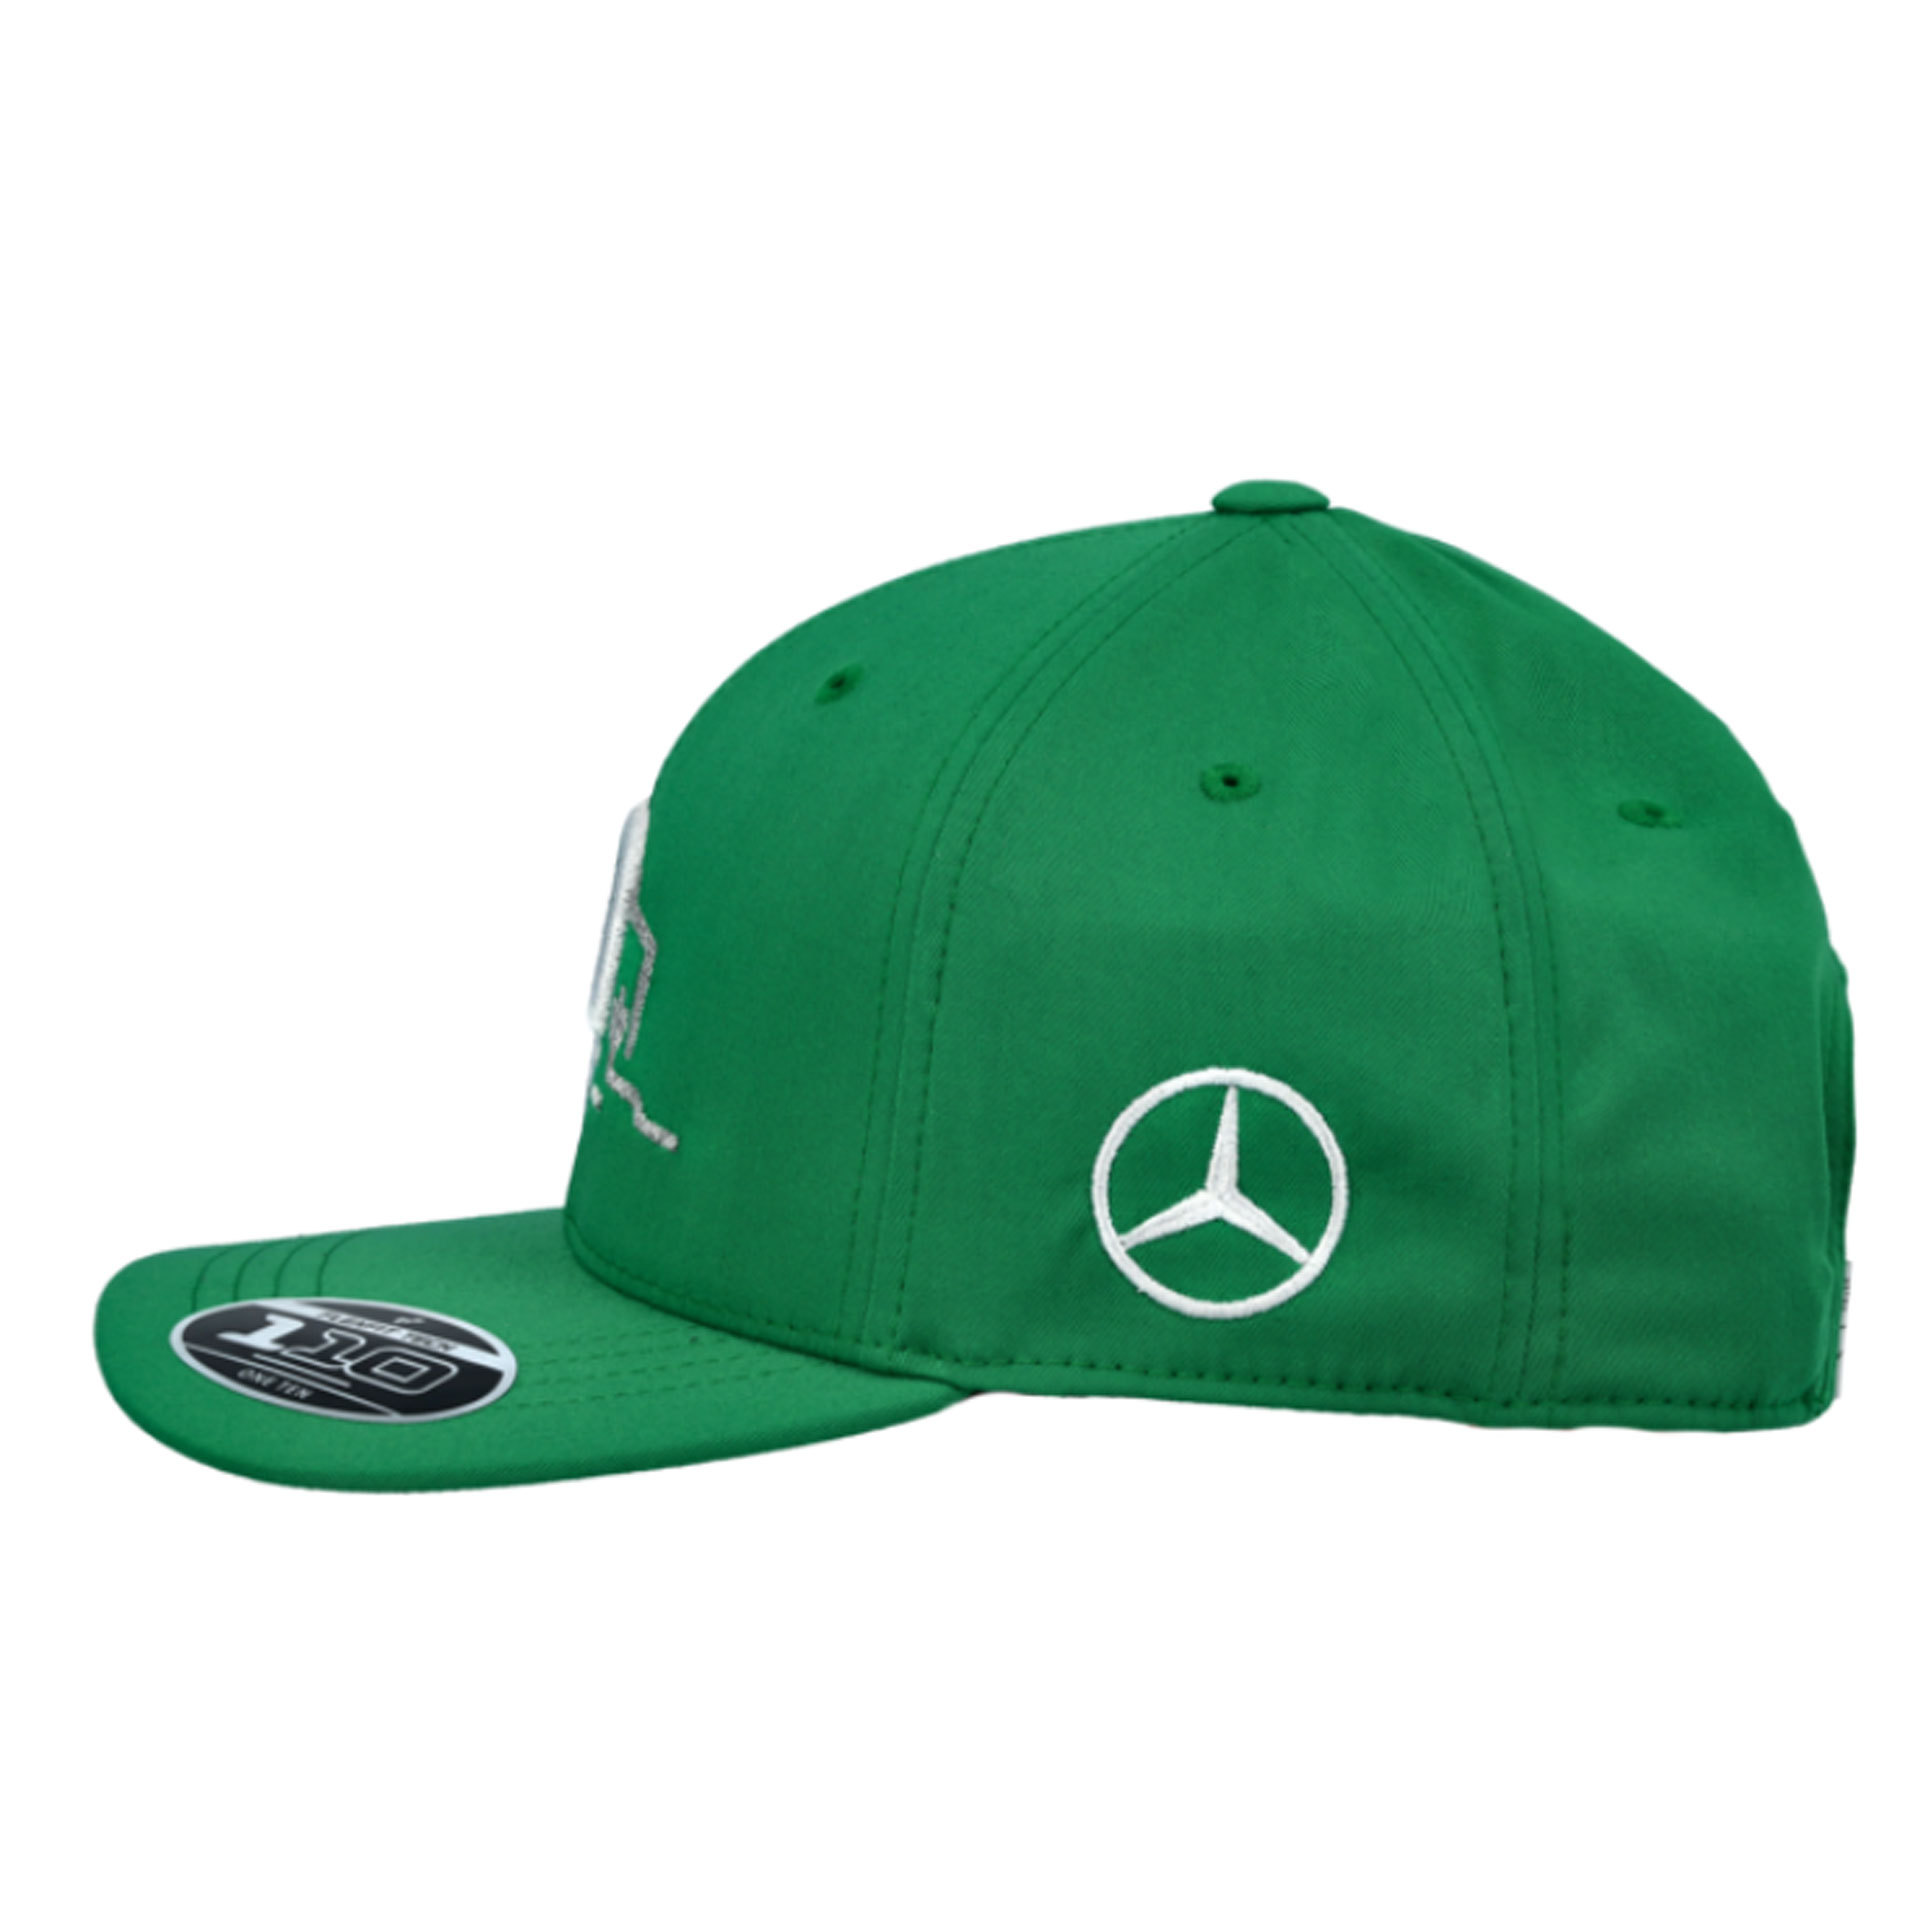 Mercedes-Benz Golf-Cap grün Basecap Kappe by PUMA 